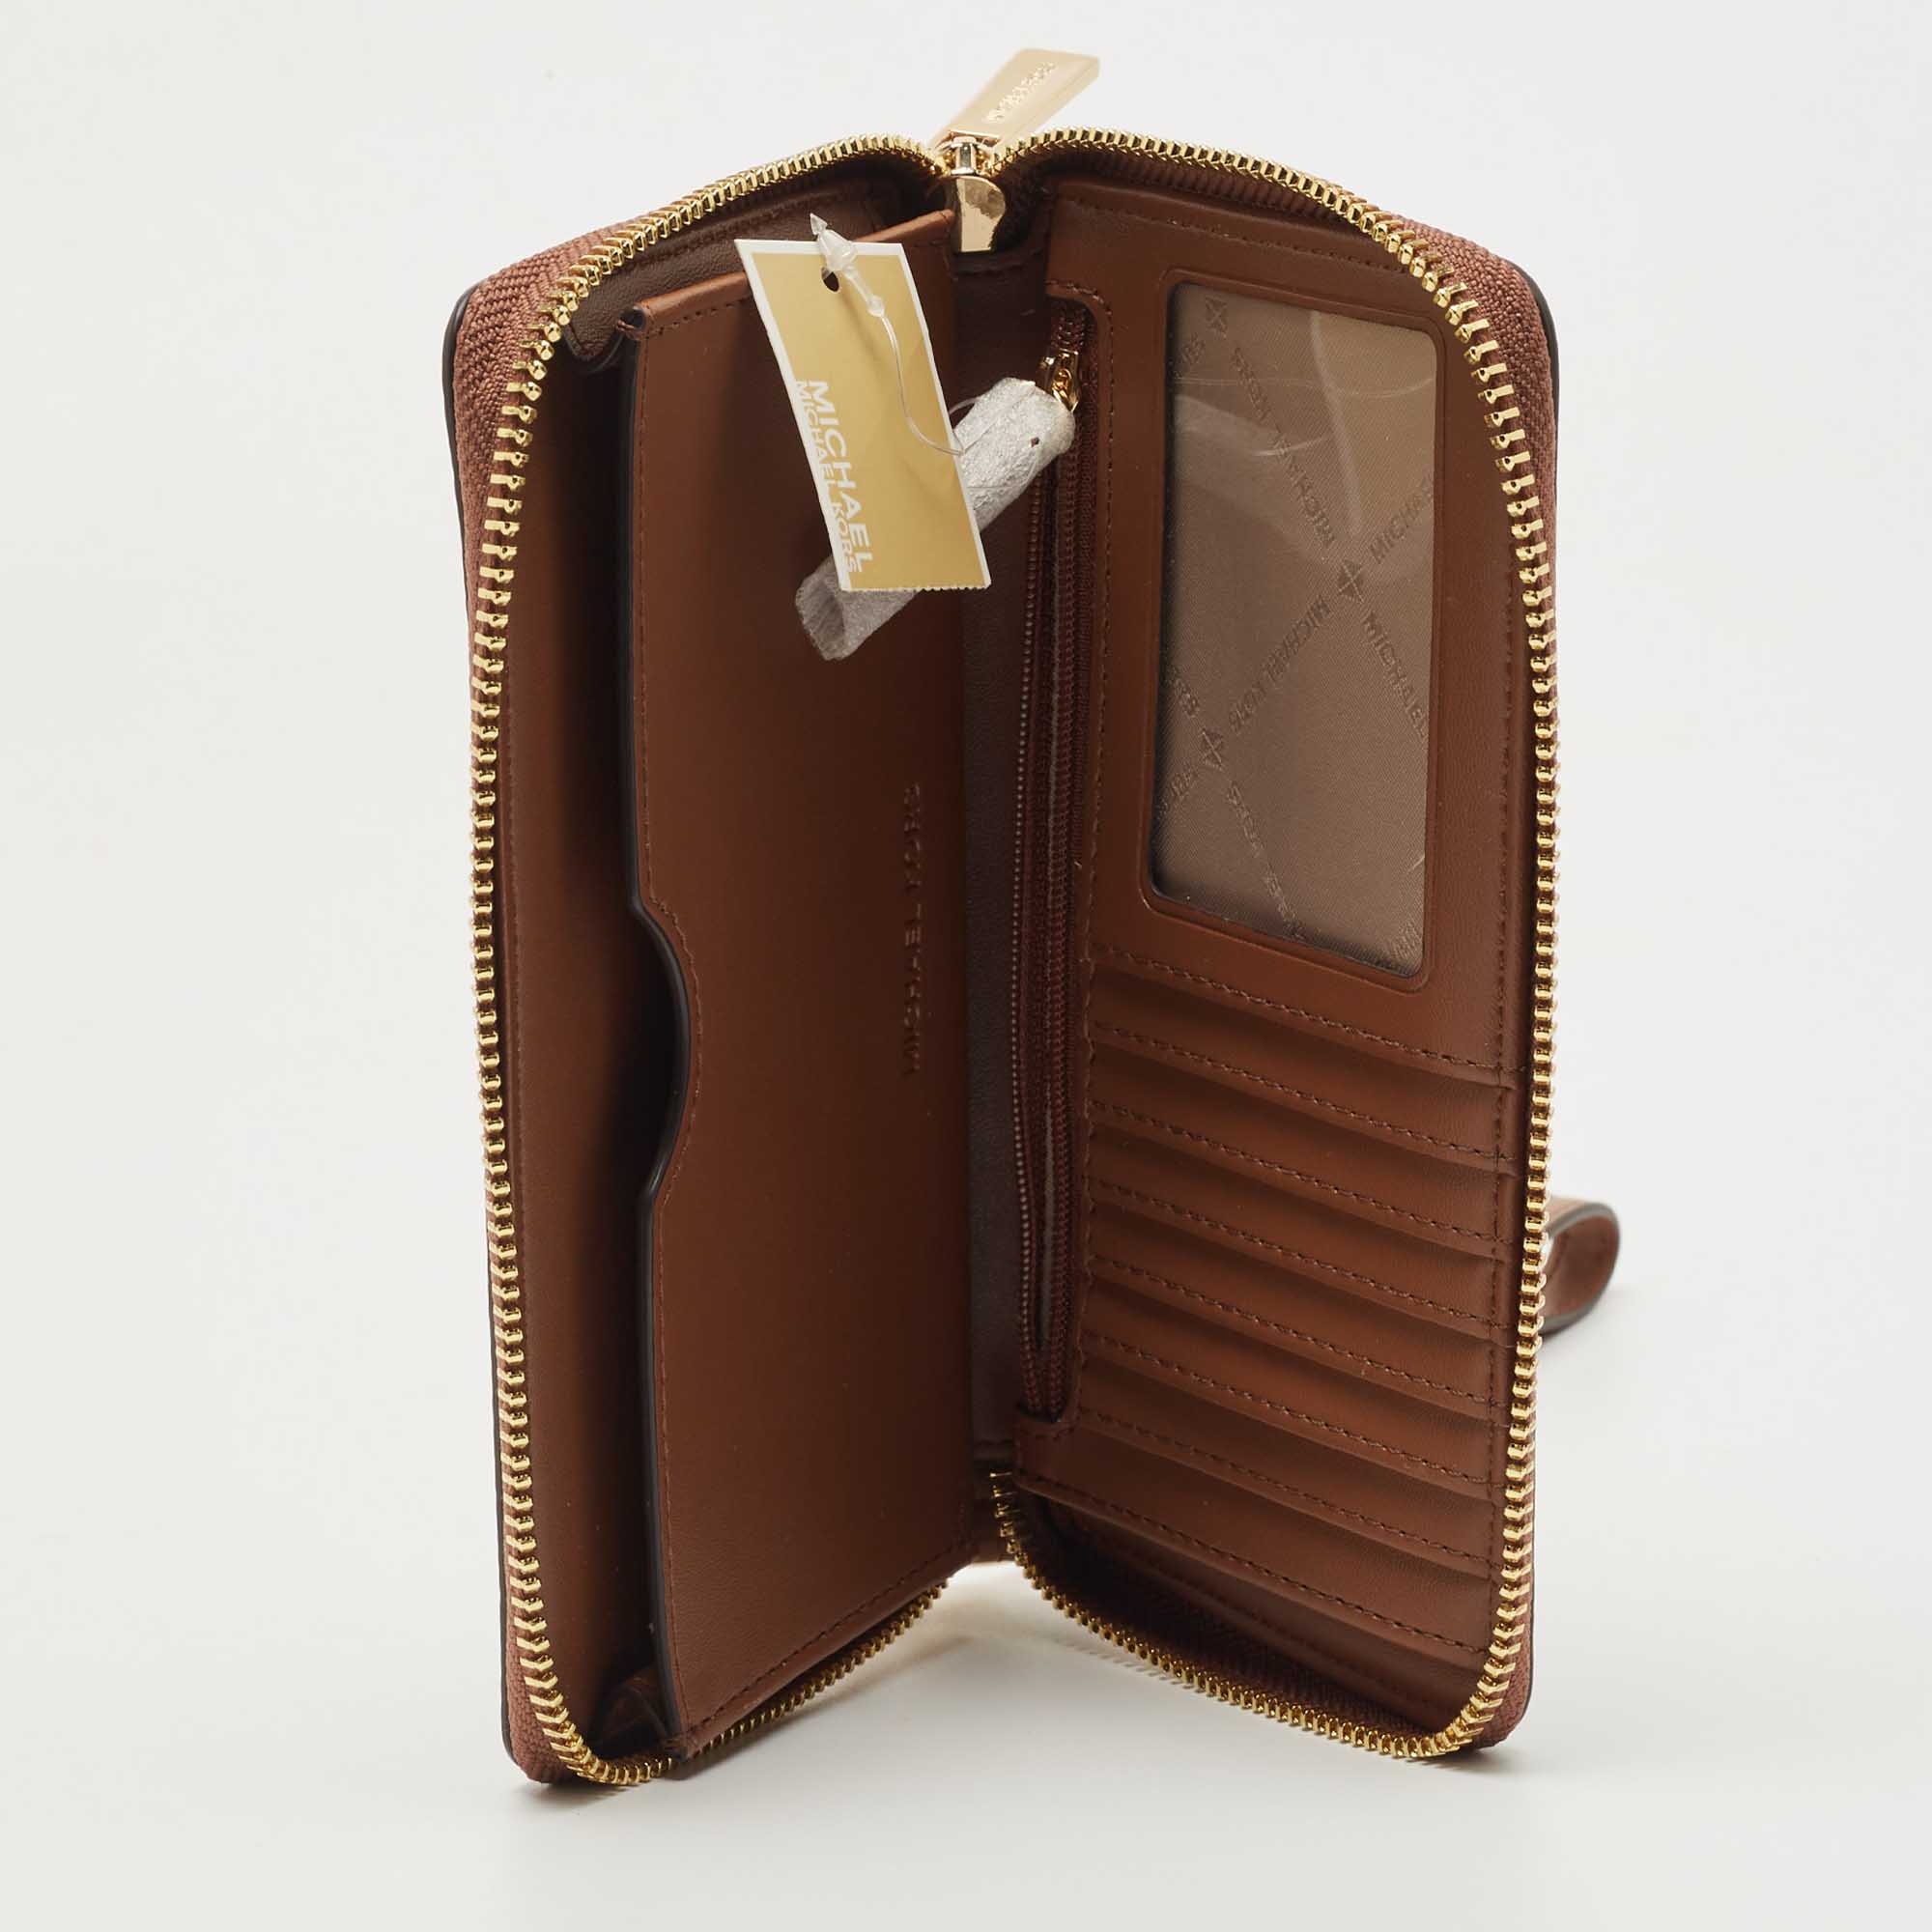 

Michael Kors Brown Leather Jet Set Phone Case Zip Around Wristlet Wallet